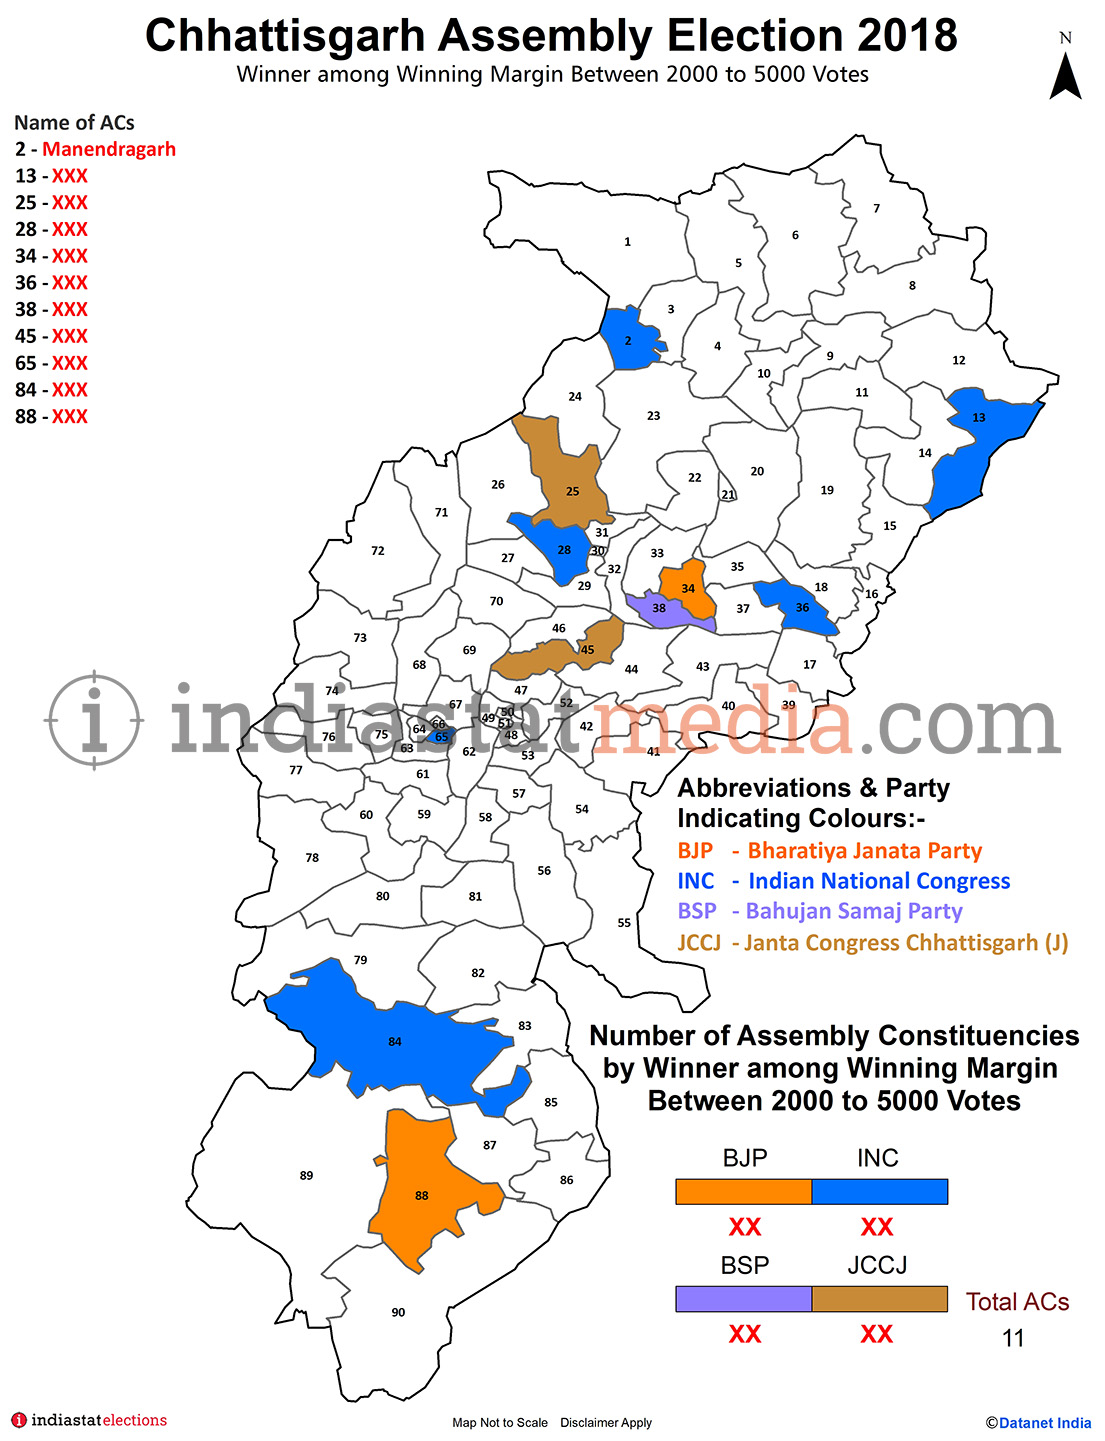 Winner among Winning Margin Between 2000 to 5000 Votes in Chhattisgarh (Assembly Election - 2018)